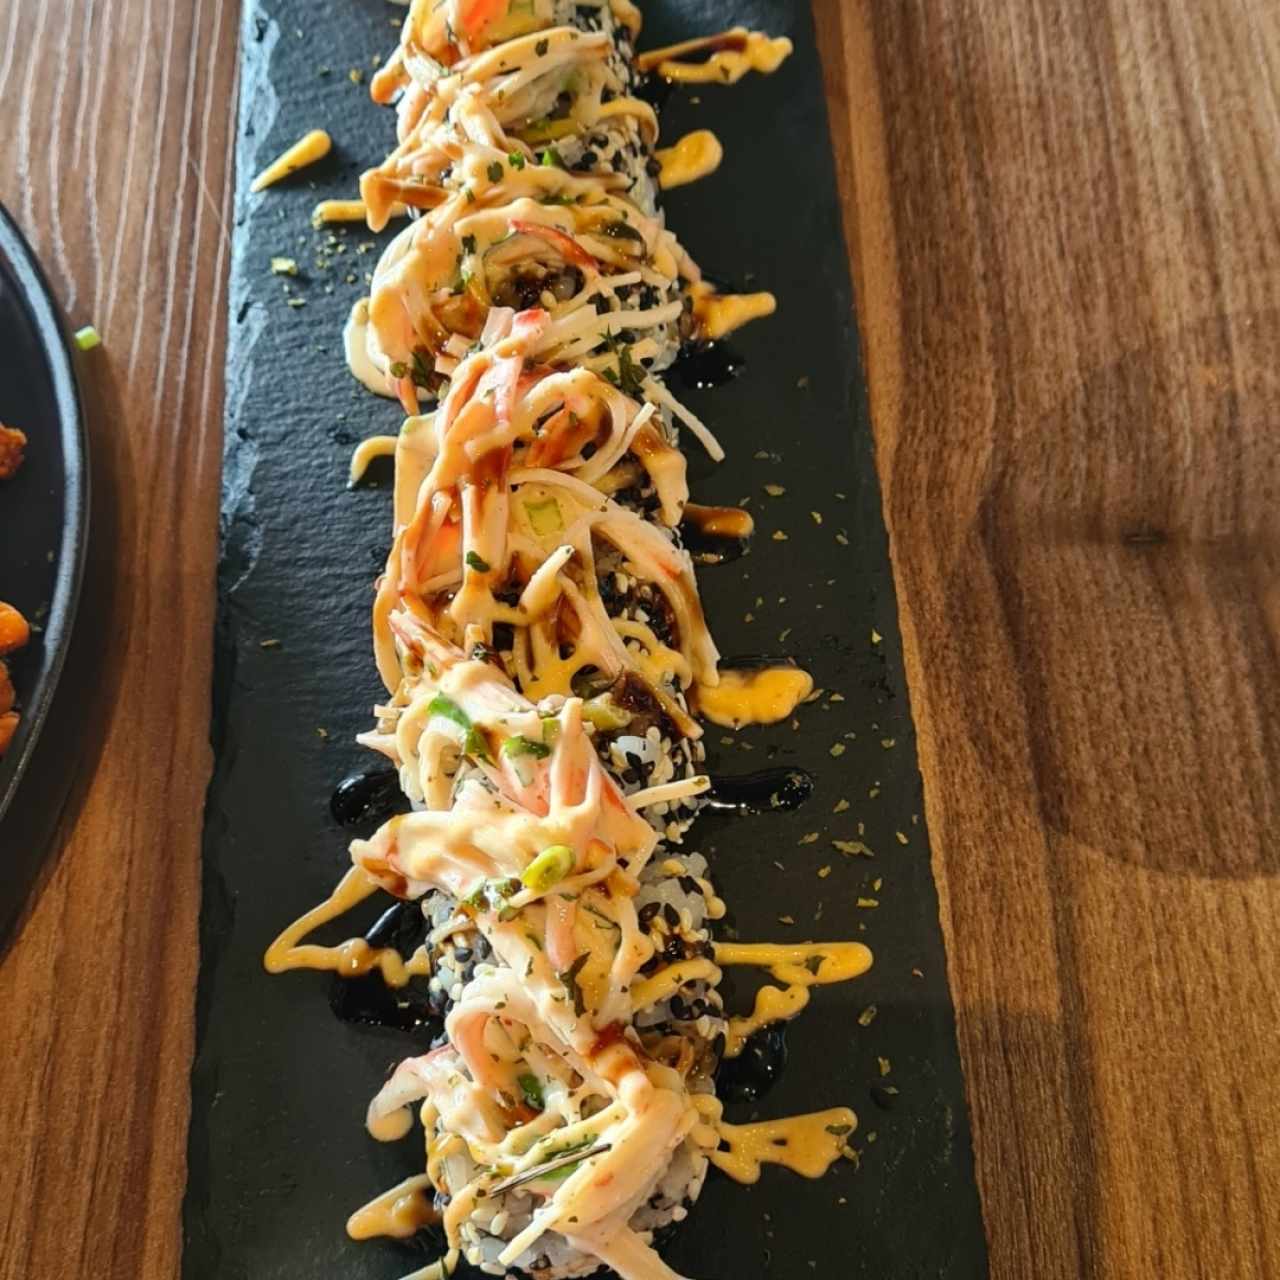 Sushi - Sinclair roll